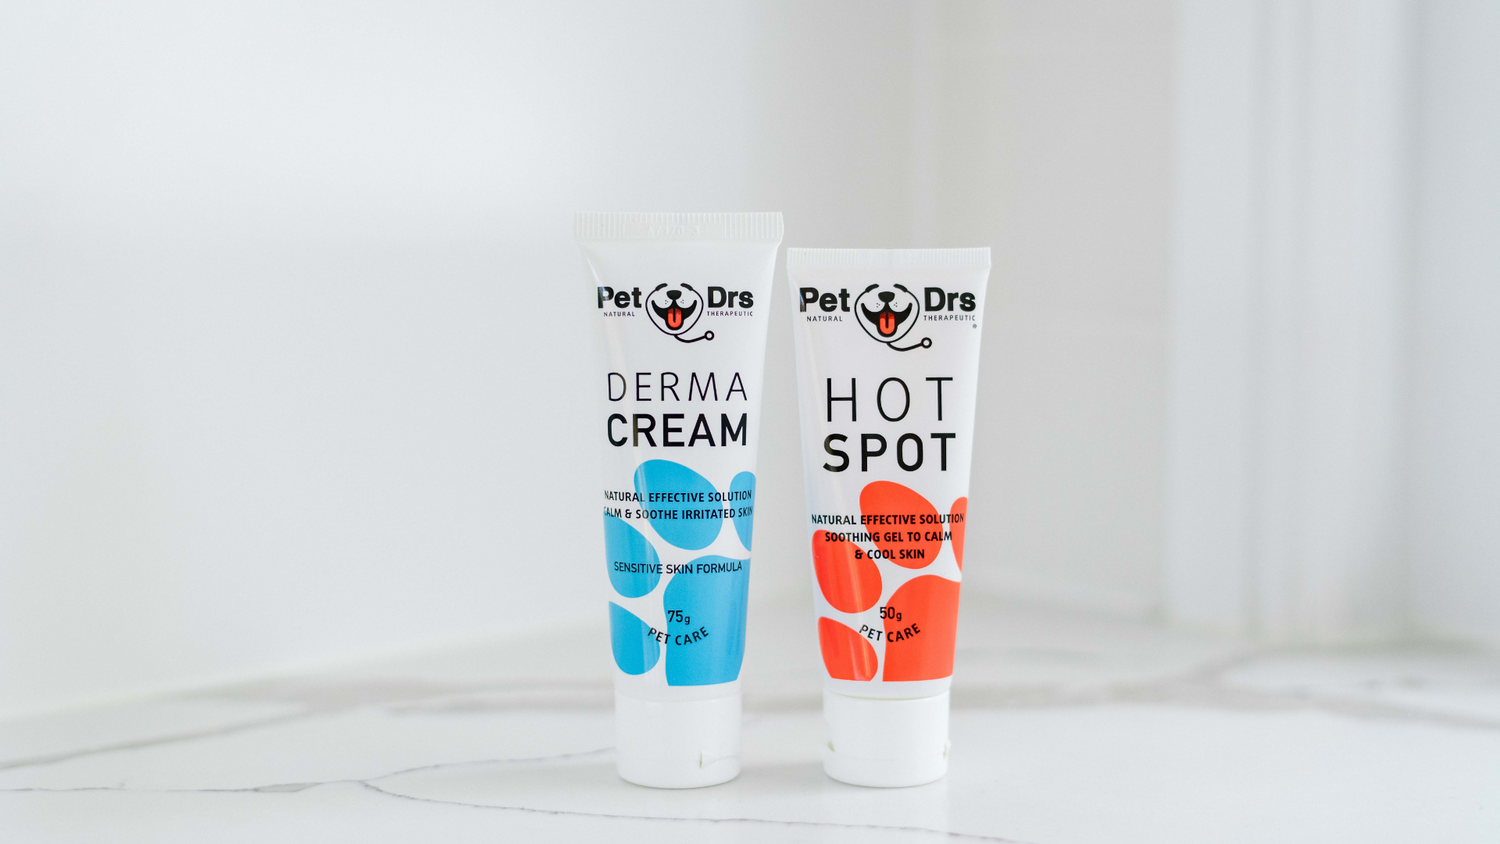 Which should I purchase? Hot Spot Gel vs Derma Cream